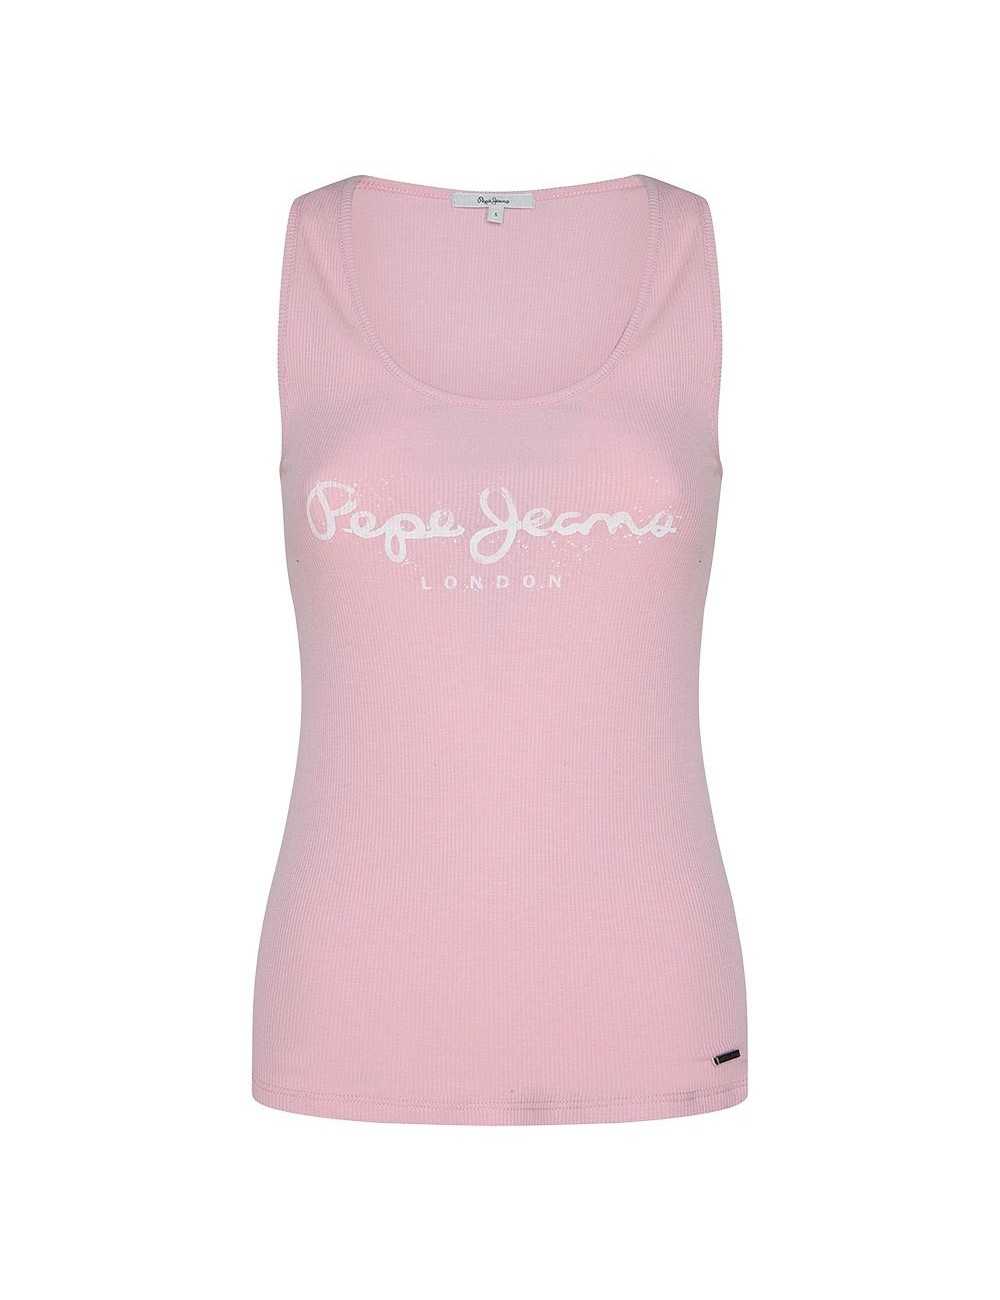 T-shirt Pepe Jeans donna senza manica pink logo - T-shirt & Top Donna